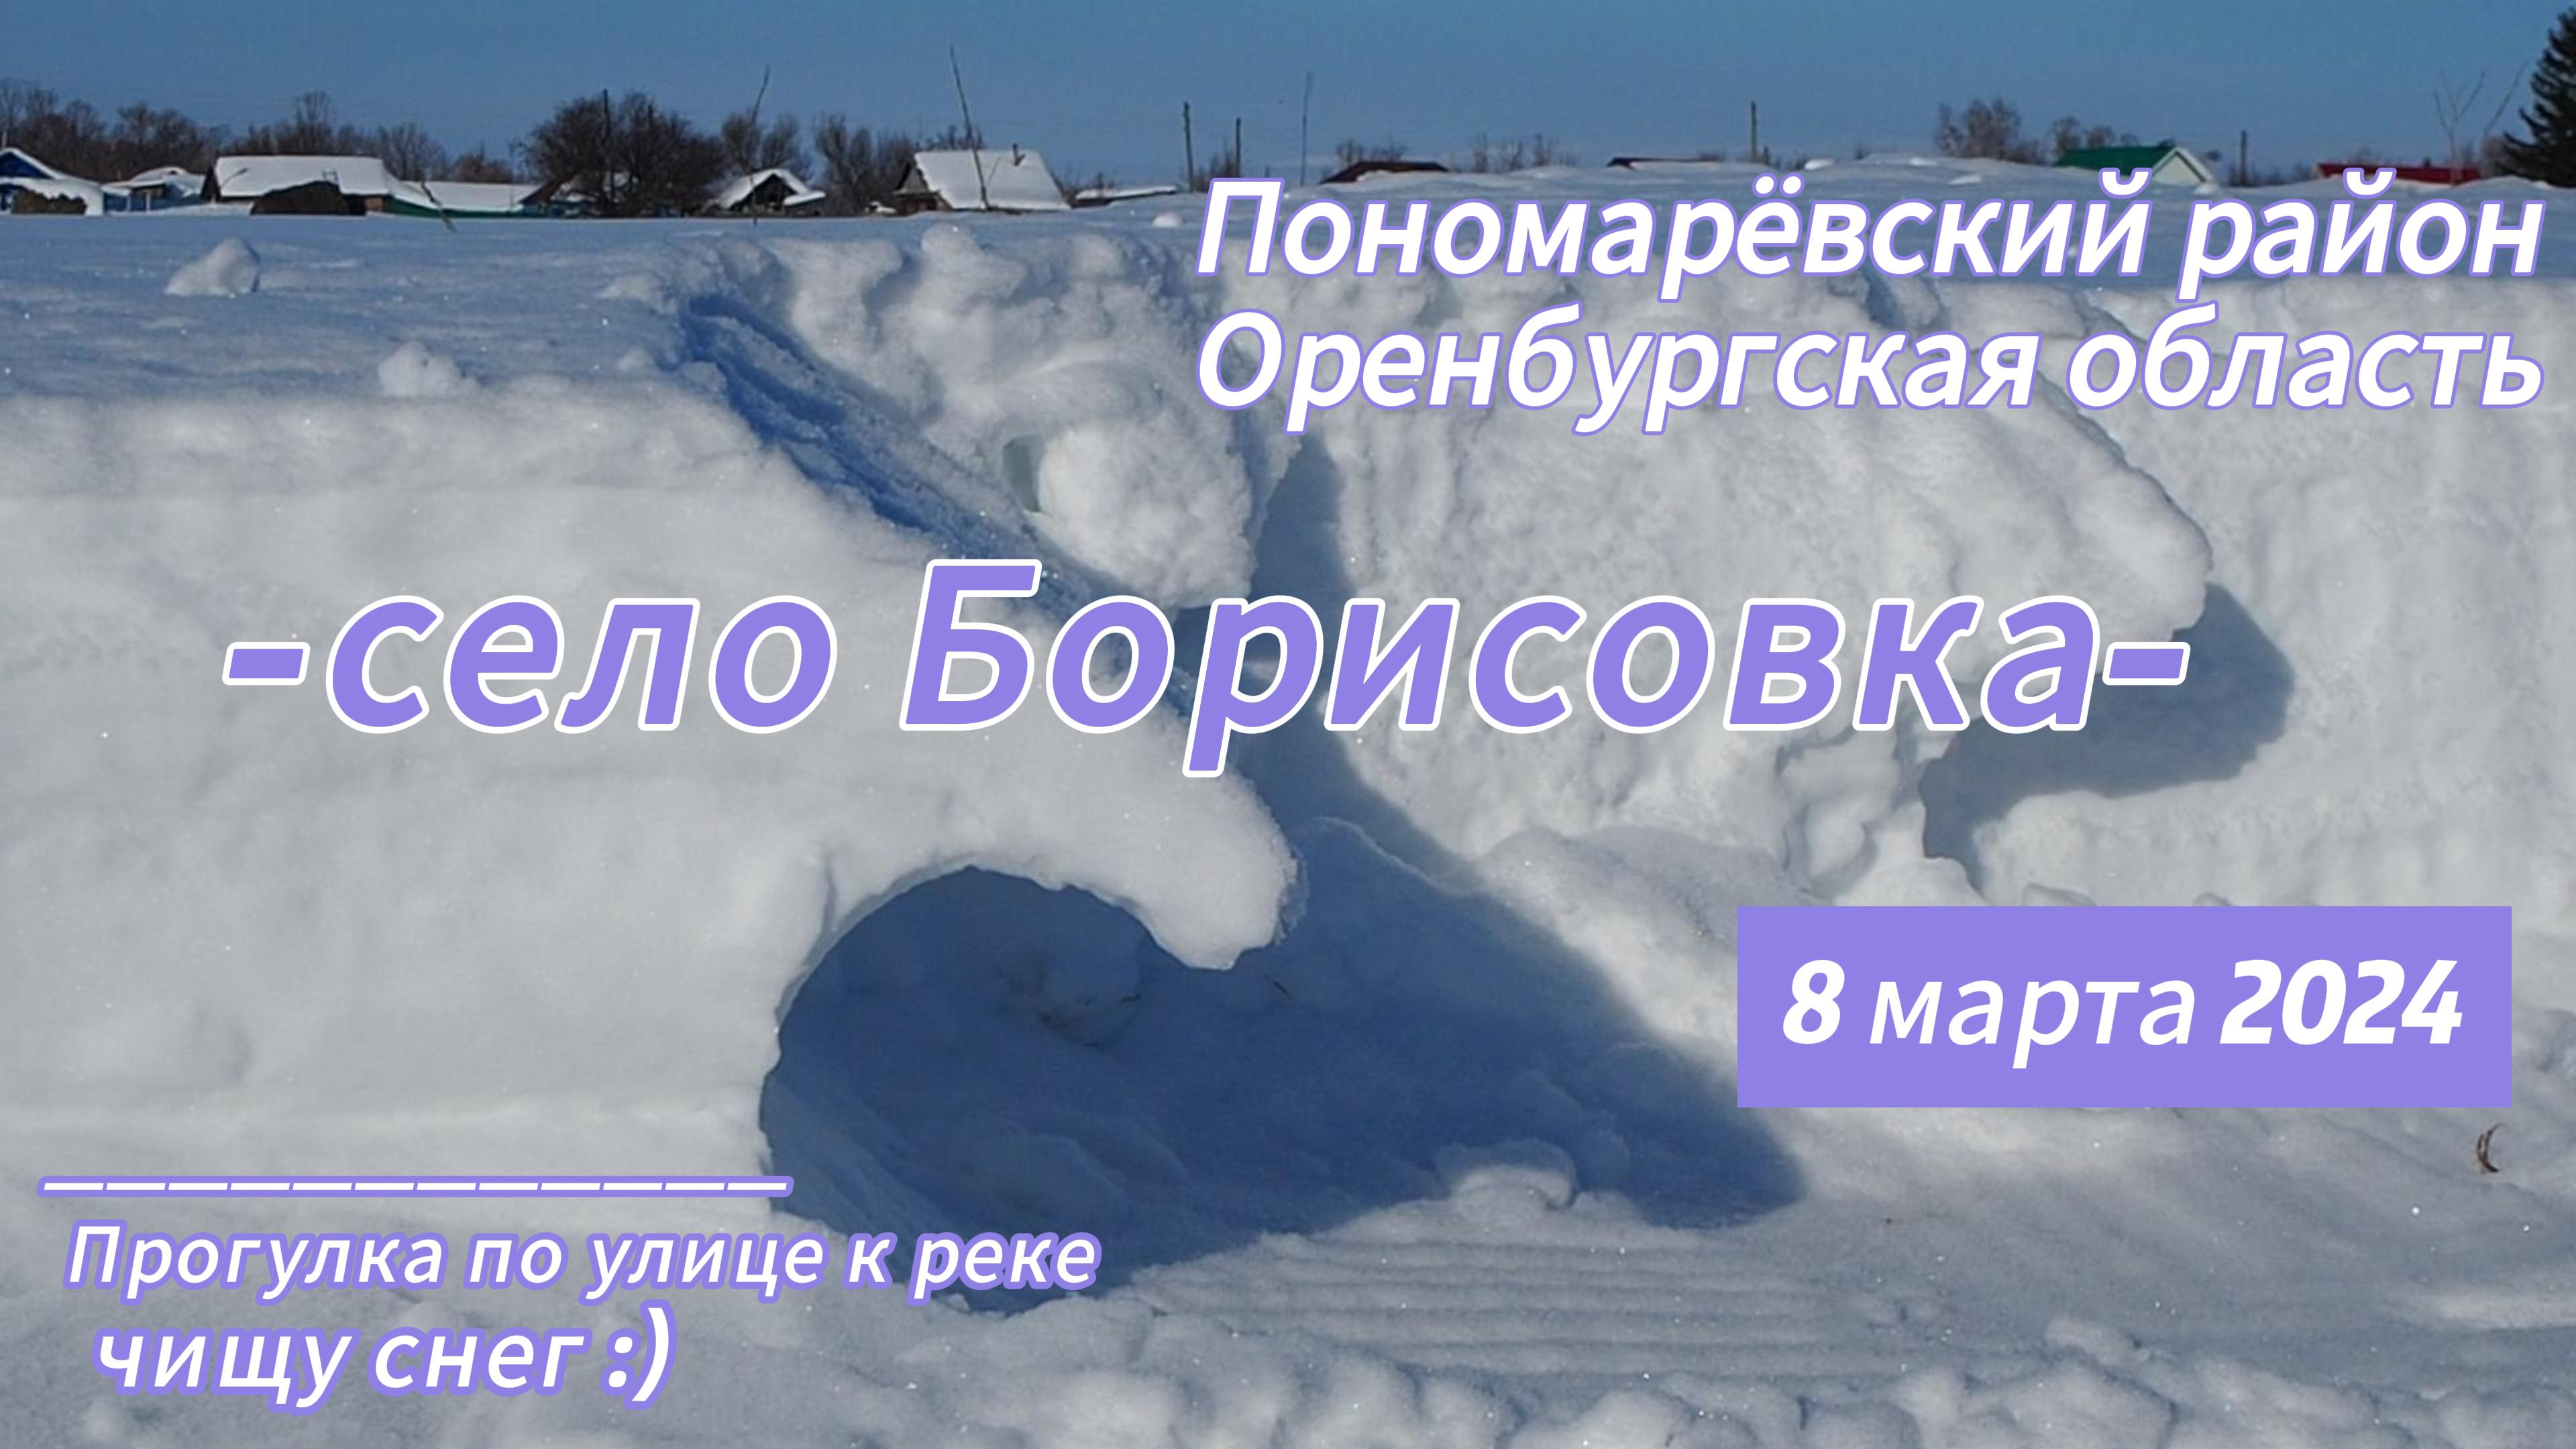 Прогулка по улице село Борисовка, много снега